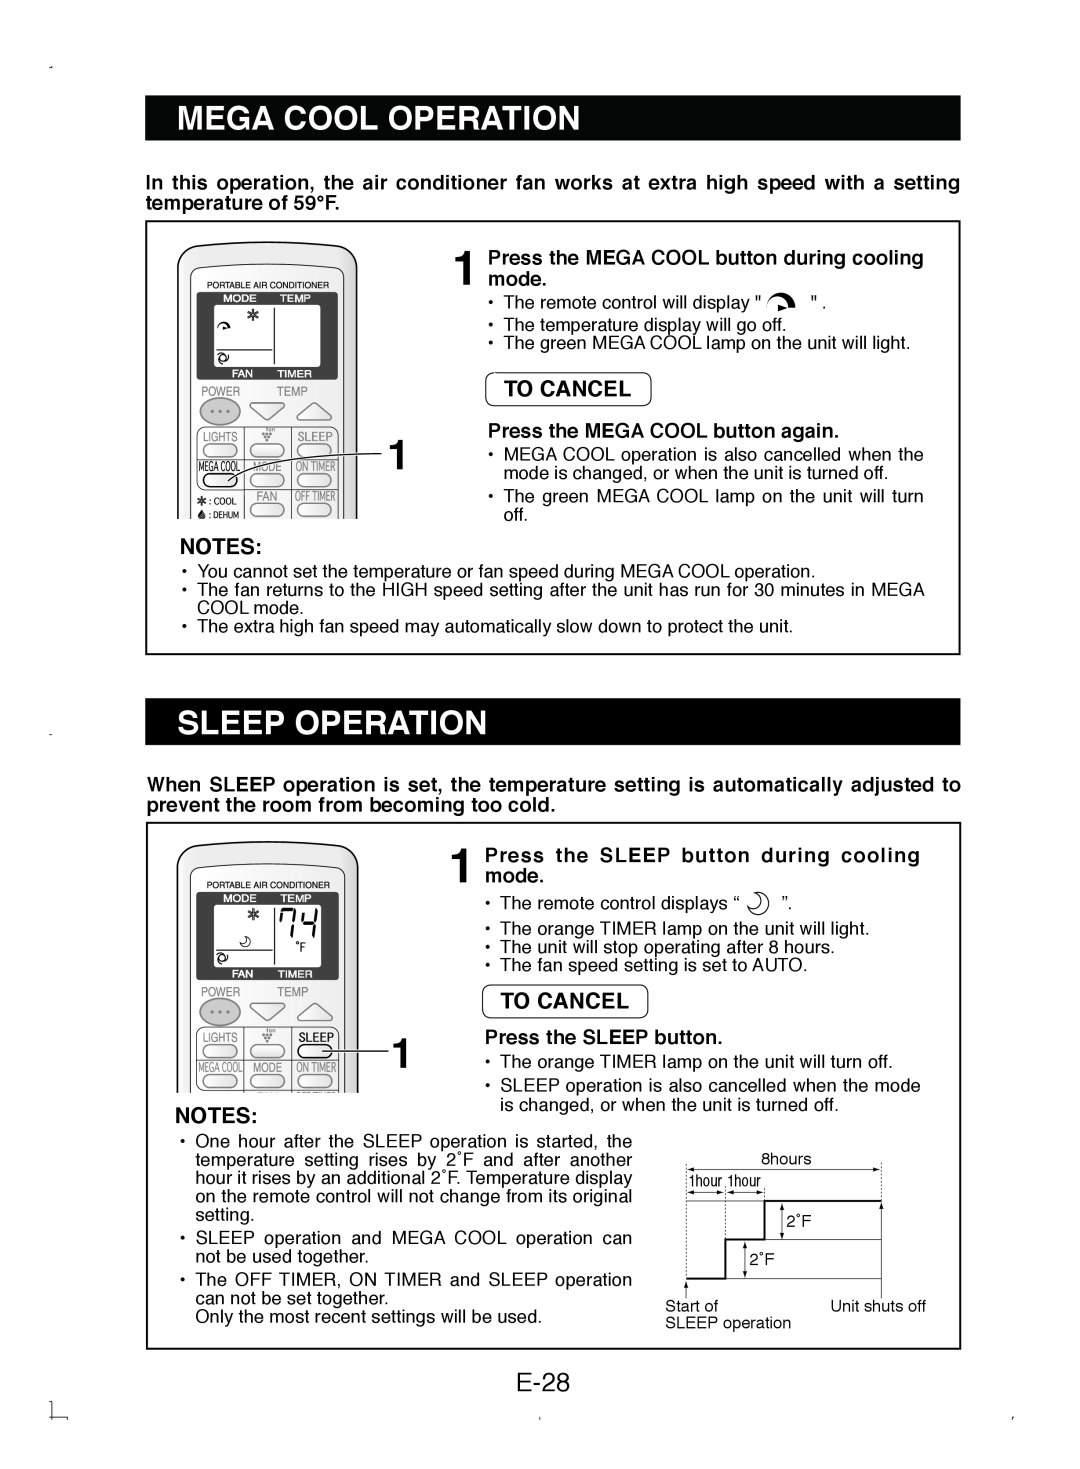 Sony CV-P12PX operation manual Mega Cool Operation, Sleep Operation, E-28, To Cancel 